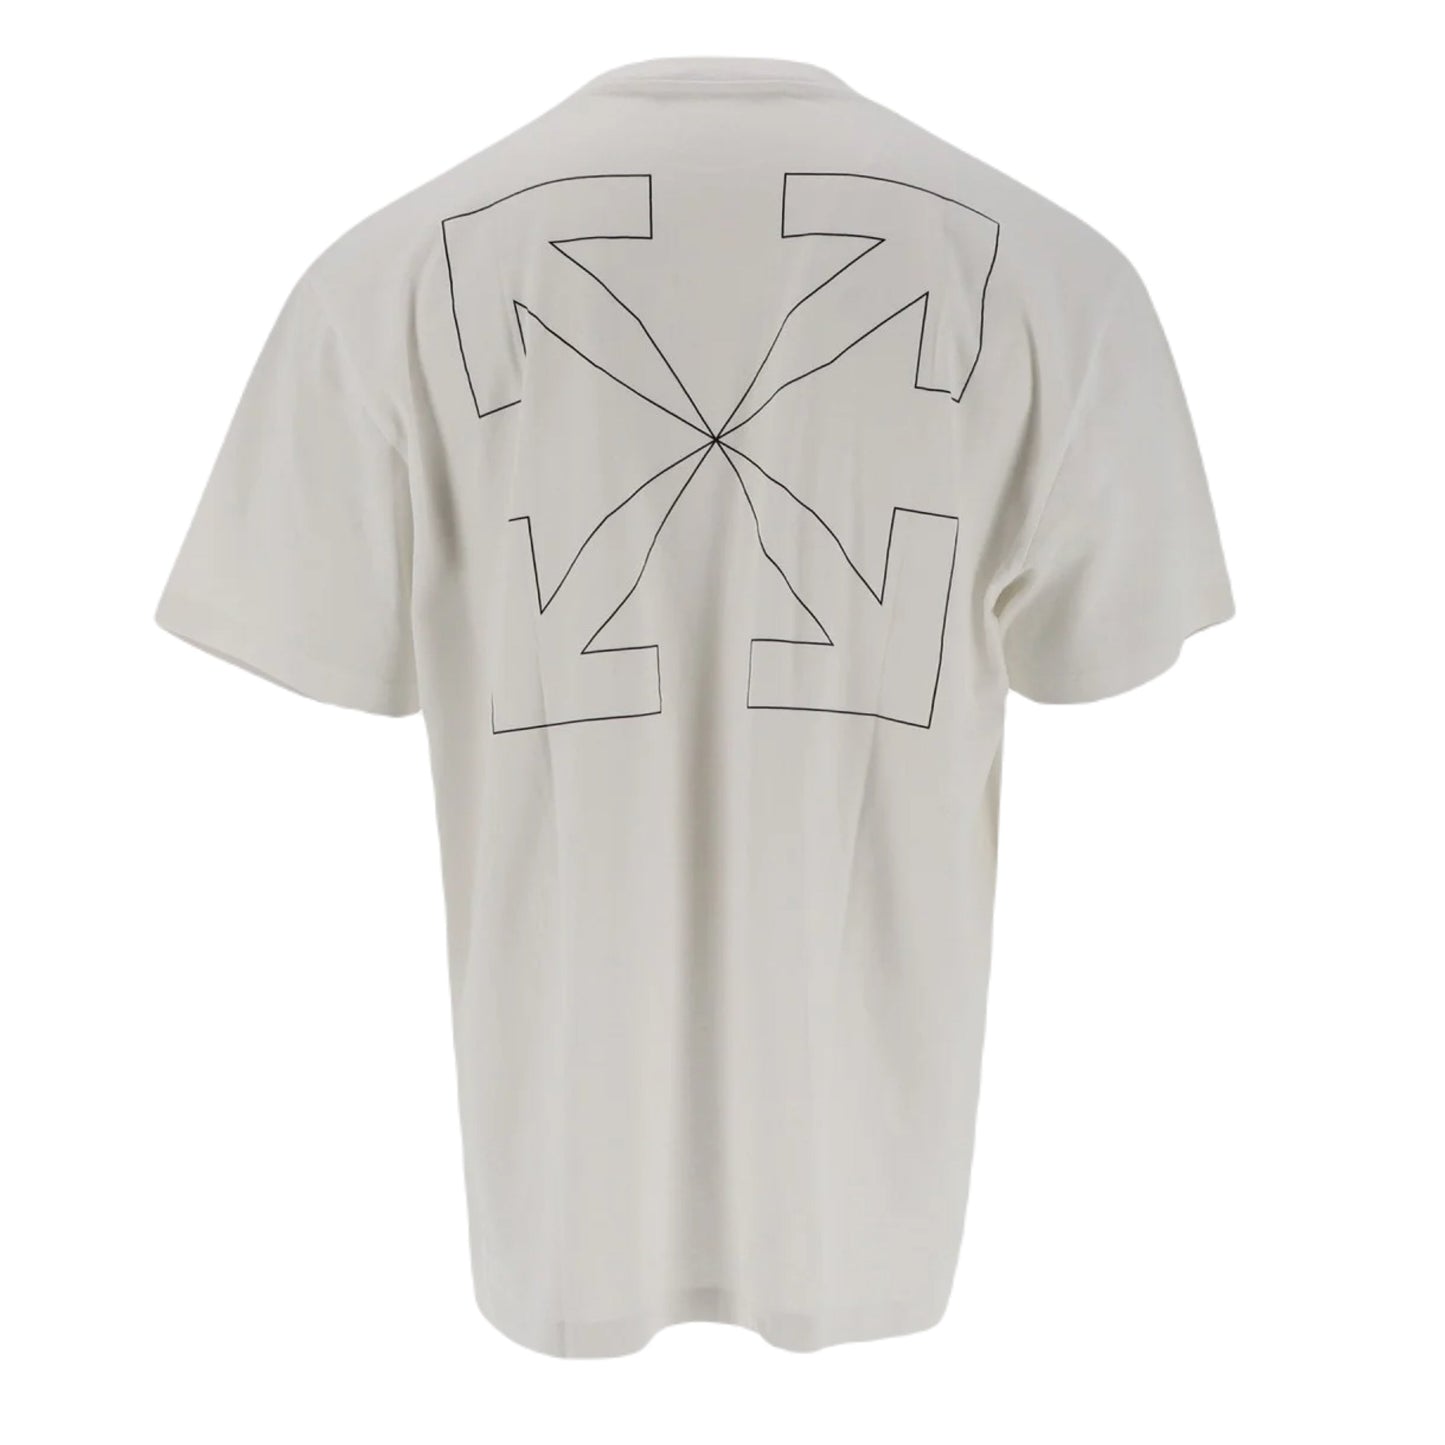 Off-White Arrow Outline T Shirt - White - Escape Menswear